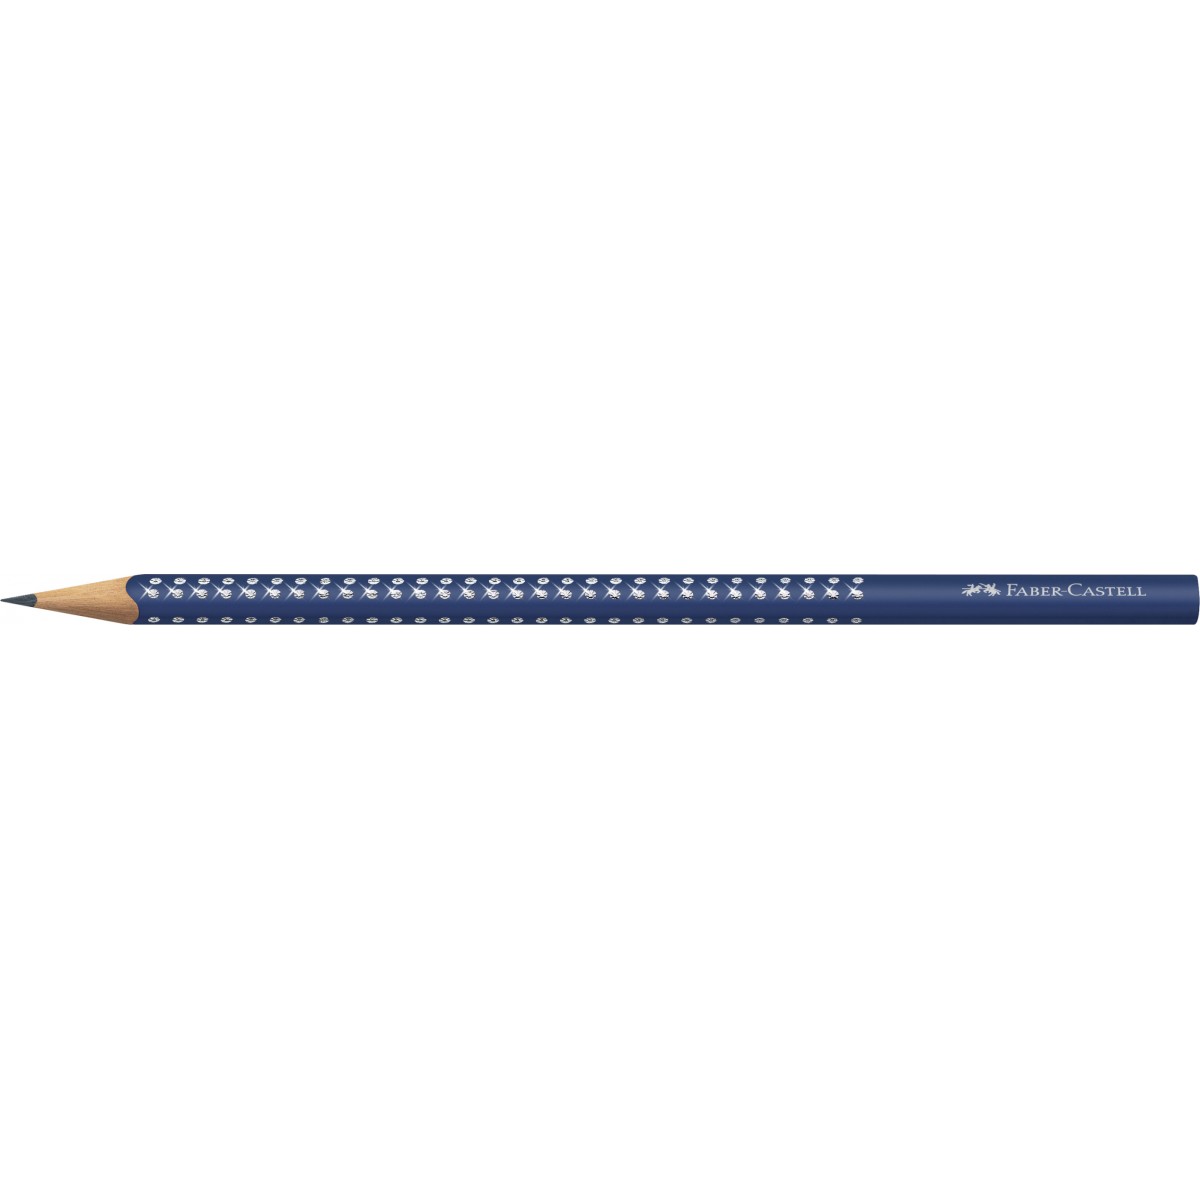 Graphite pencil Sparkle dark blue